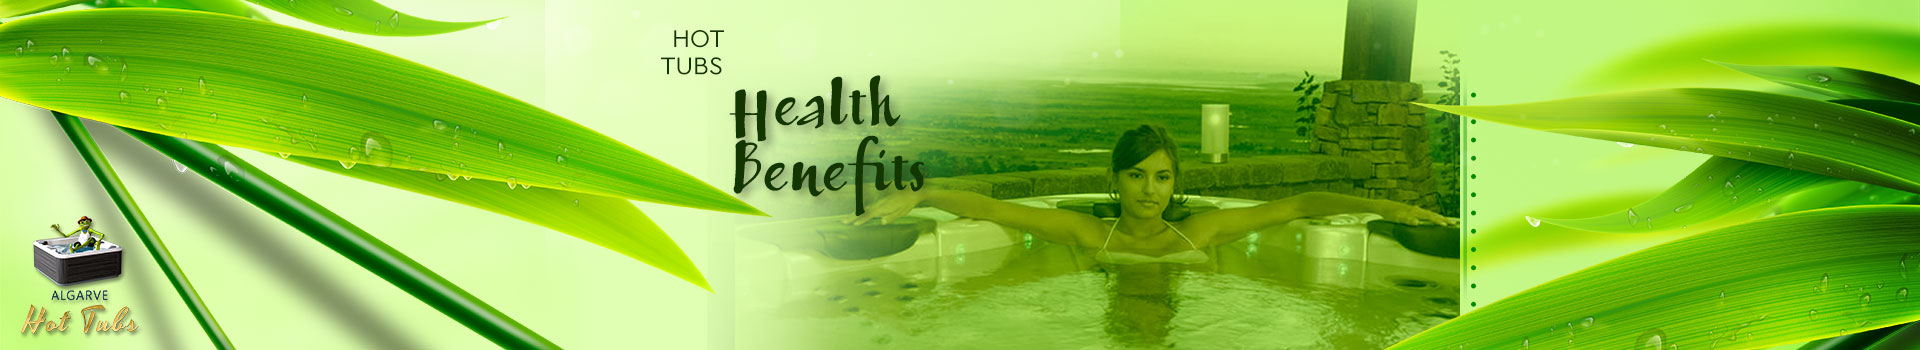 Hot Tubs Health Benefits - Wellness Dreams Algarve